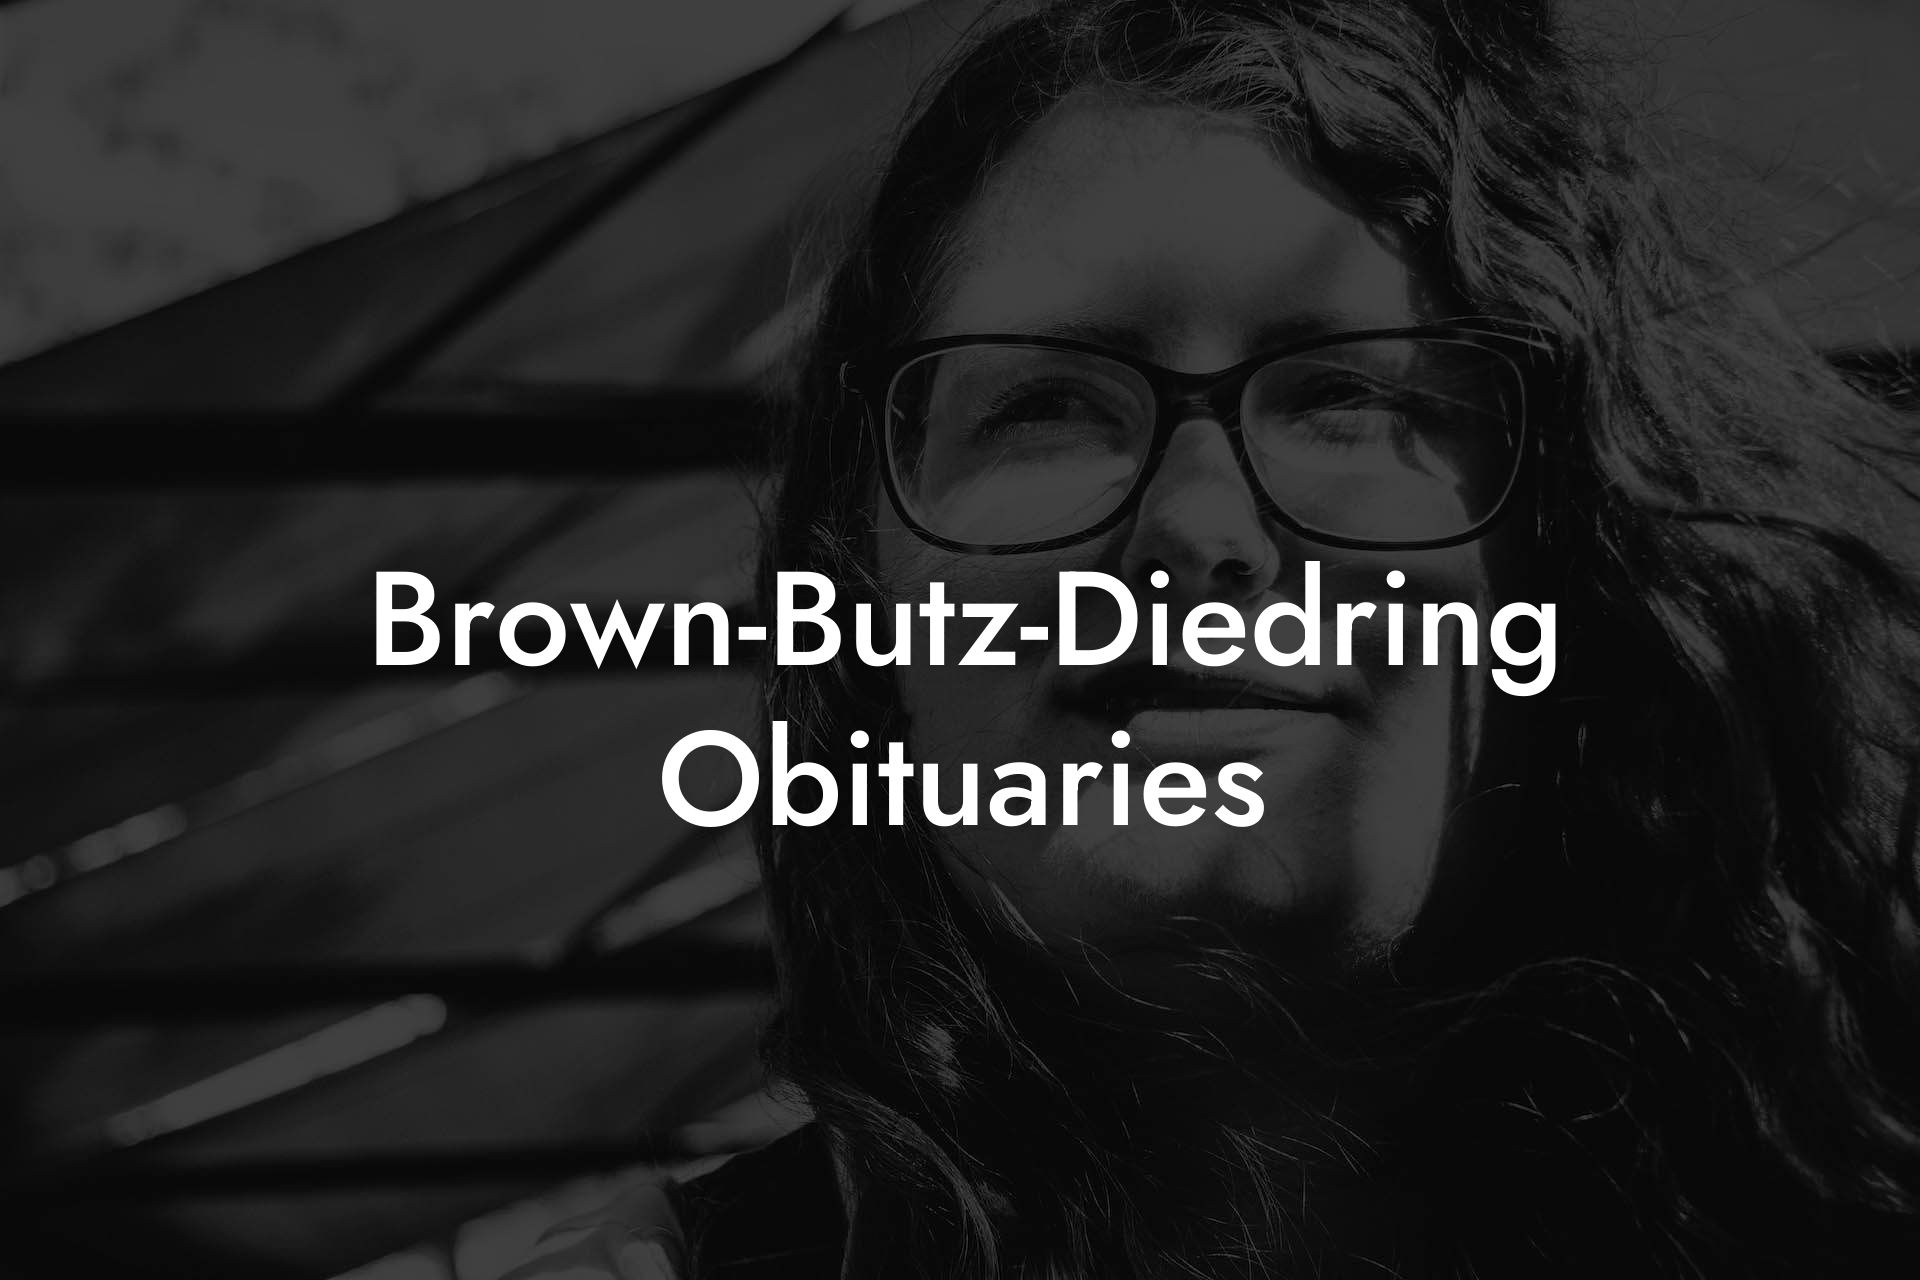 Brown-Butz-Diedring Obituaries